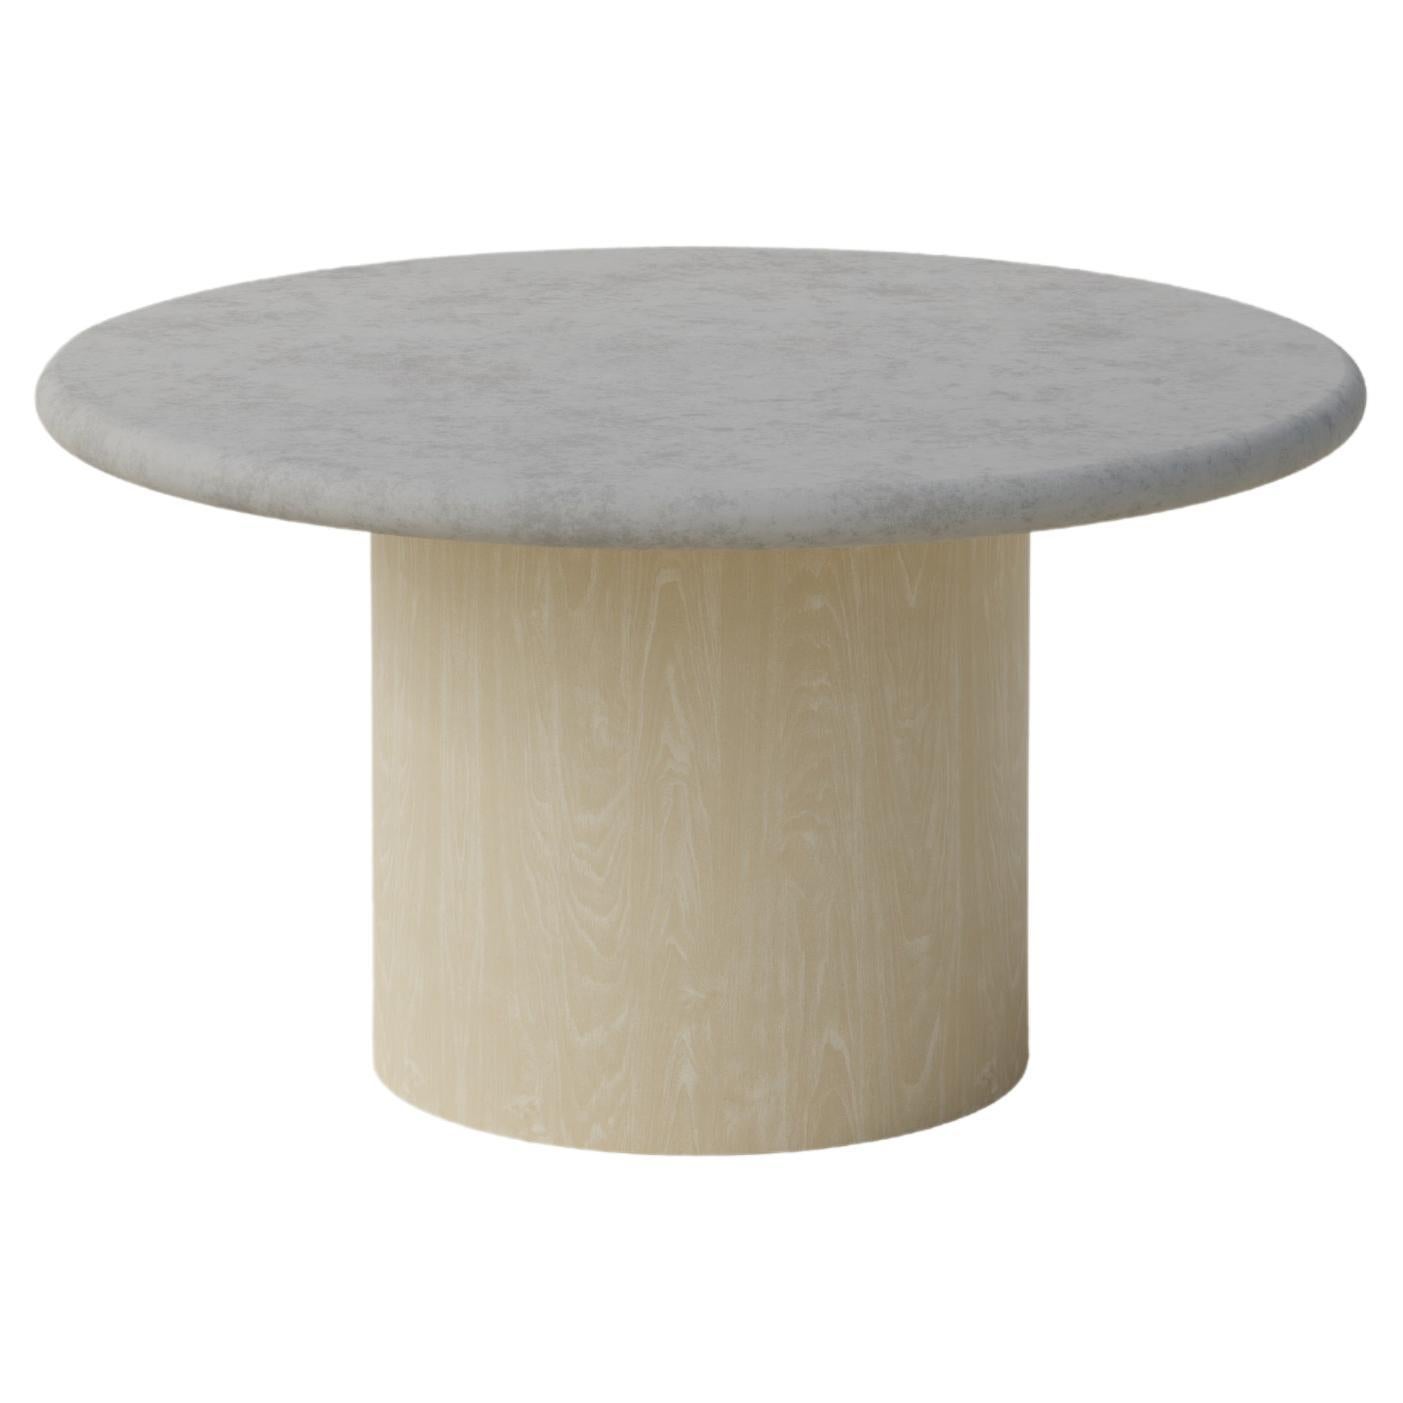 Raindrop Coffee Table, 600, Microcrete / Ash For Sale